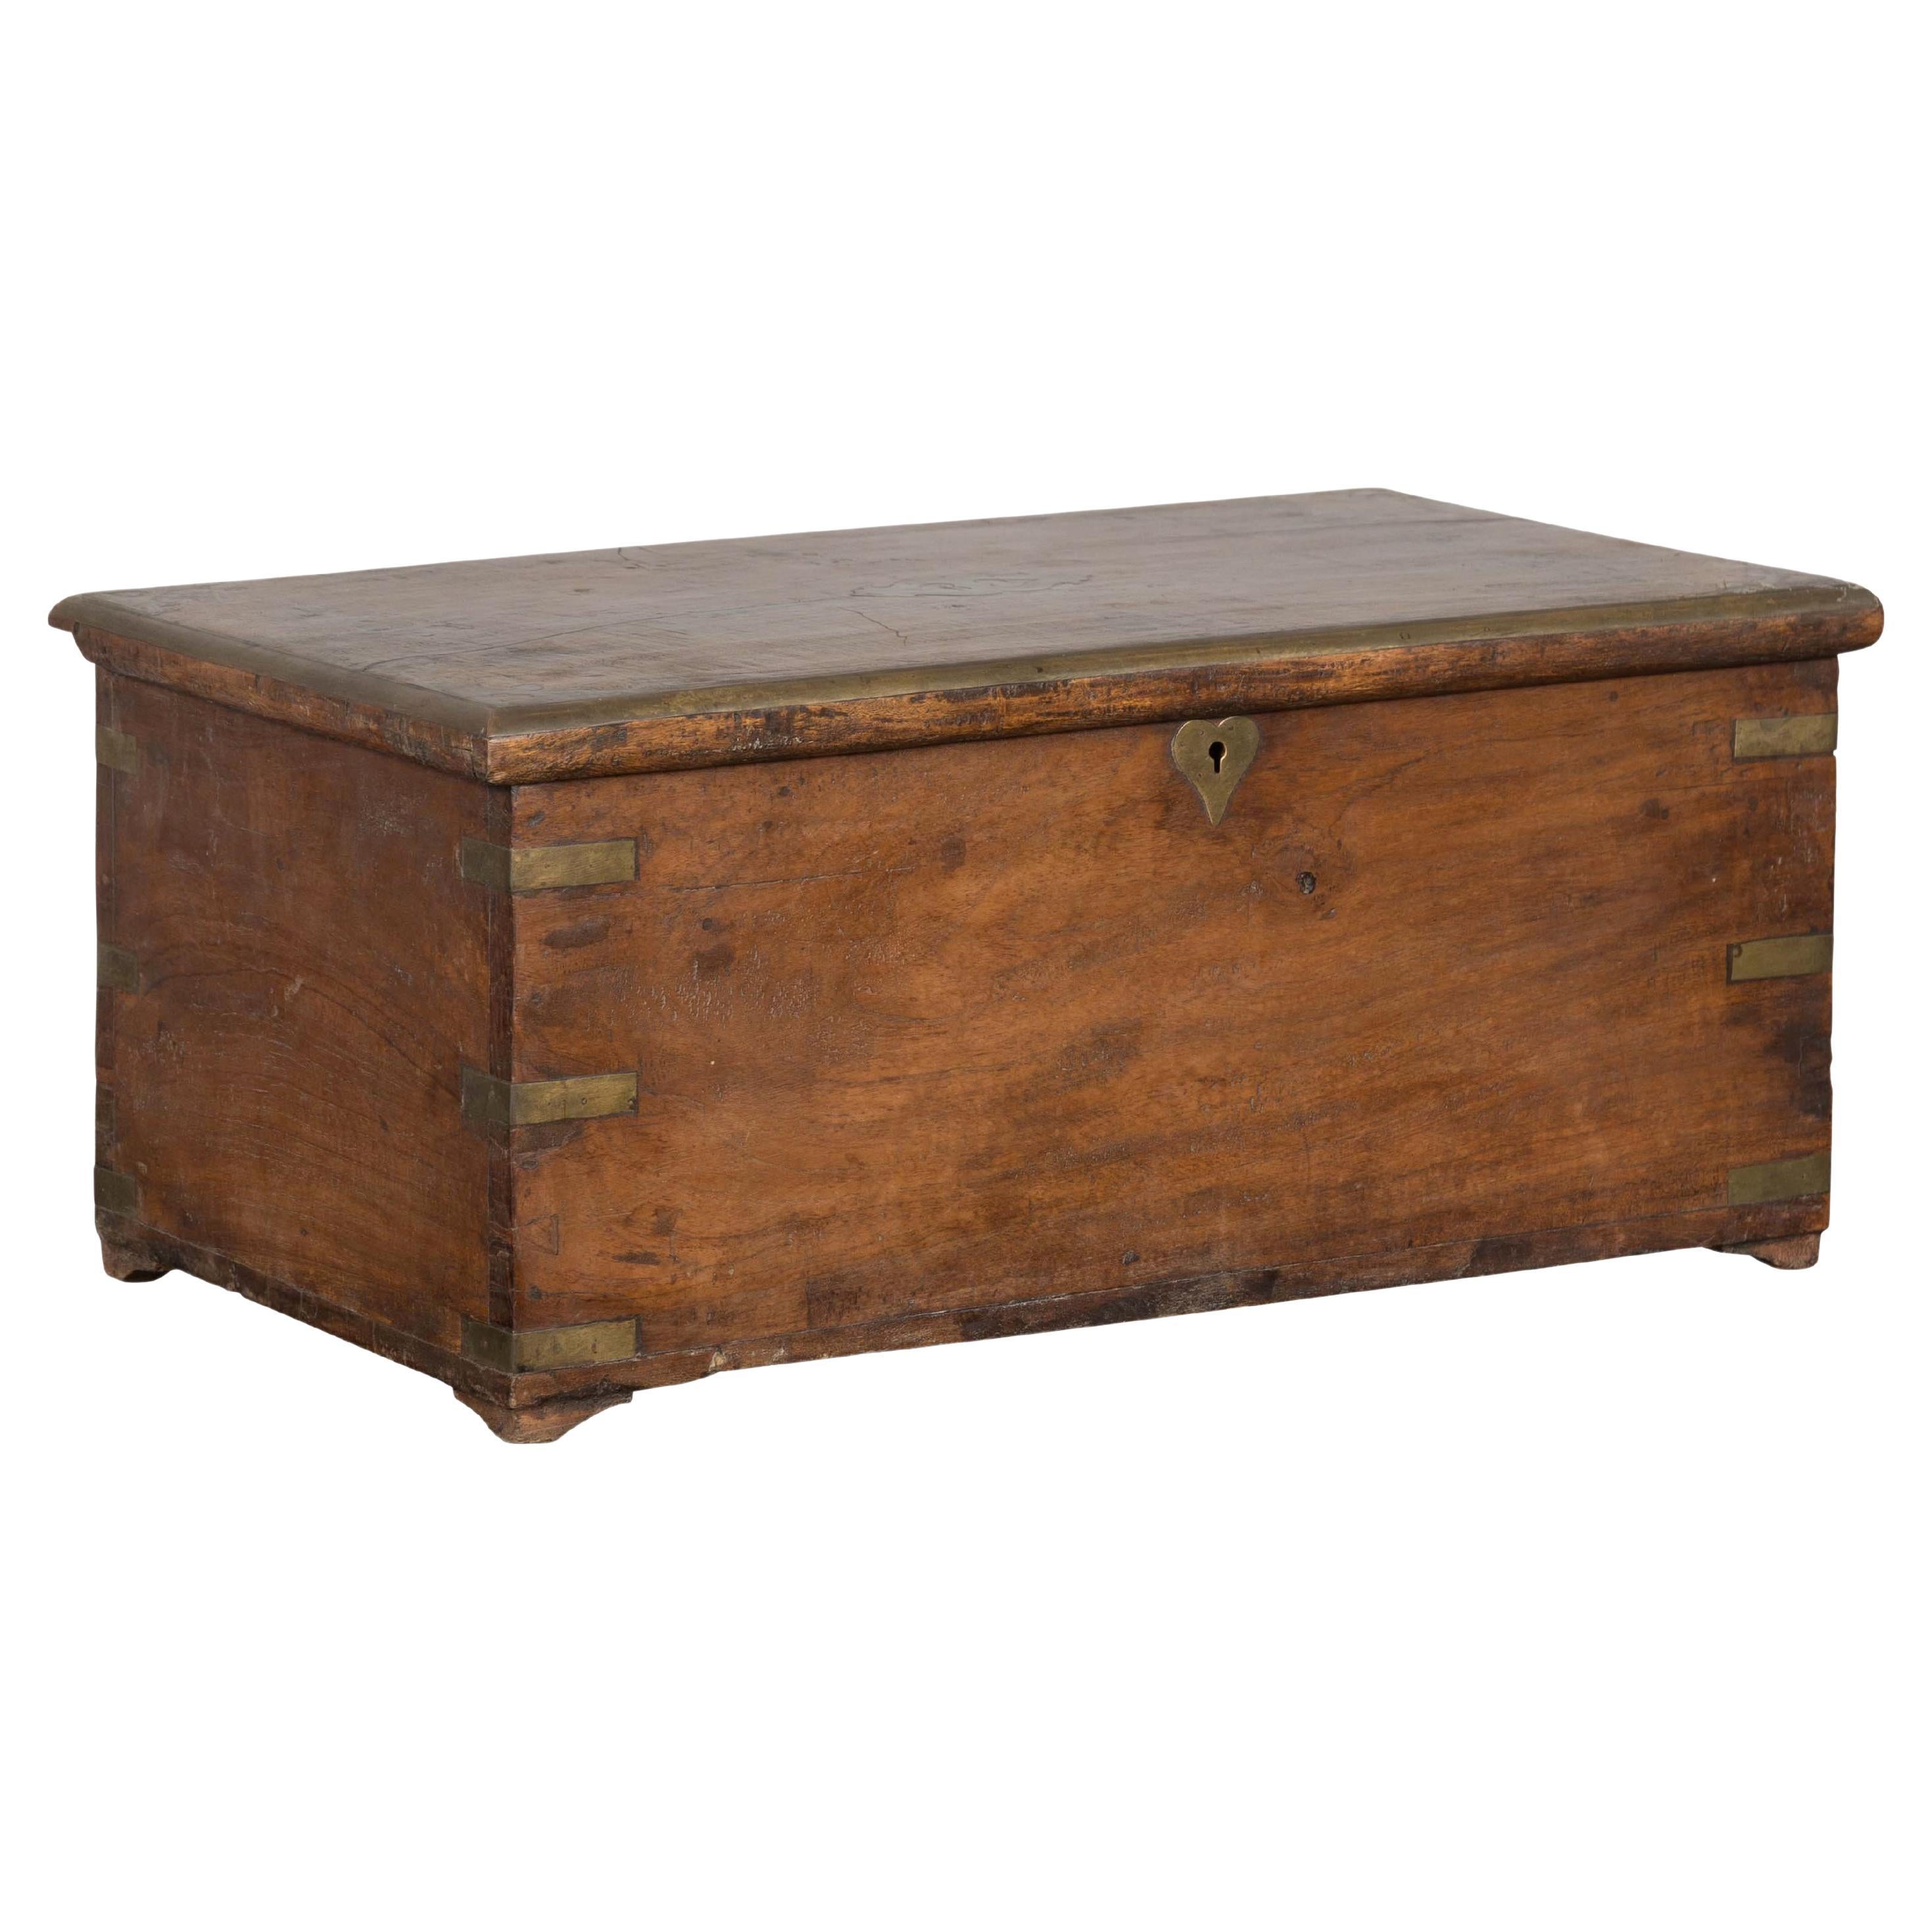 19th Century Rectangular Antique Wooden Storage Chest For Sale